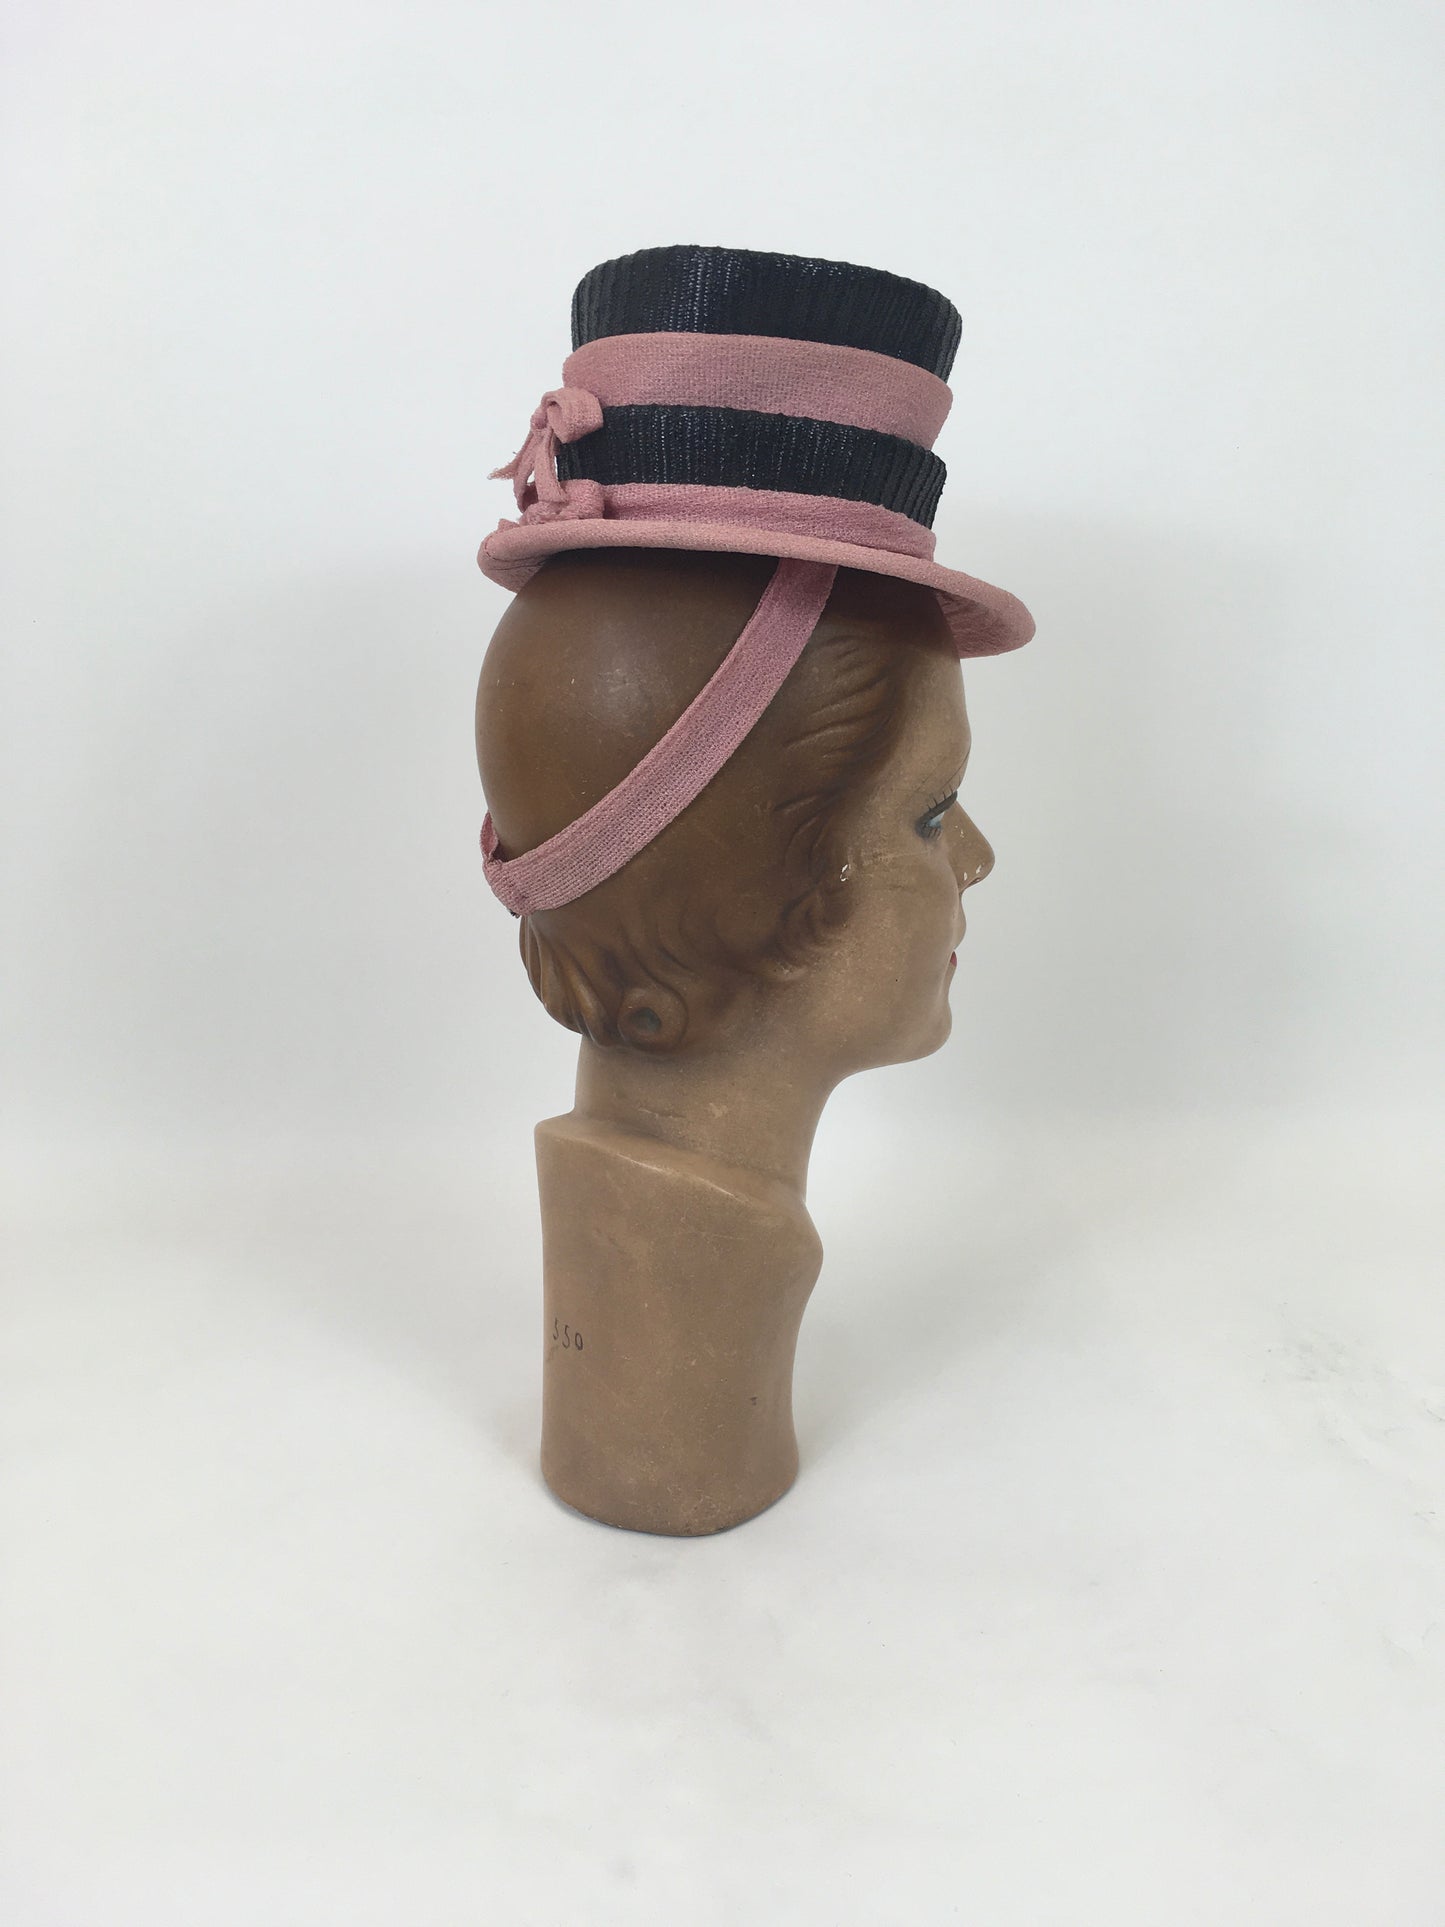 Original 1940's SENSATIONAL American Toy Topper Tilt Hat - In Black with Powered Rose